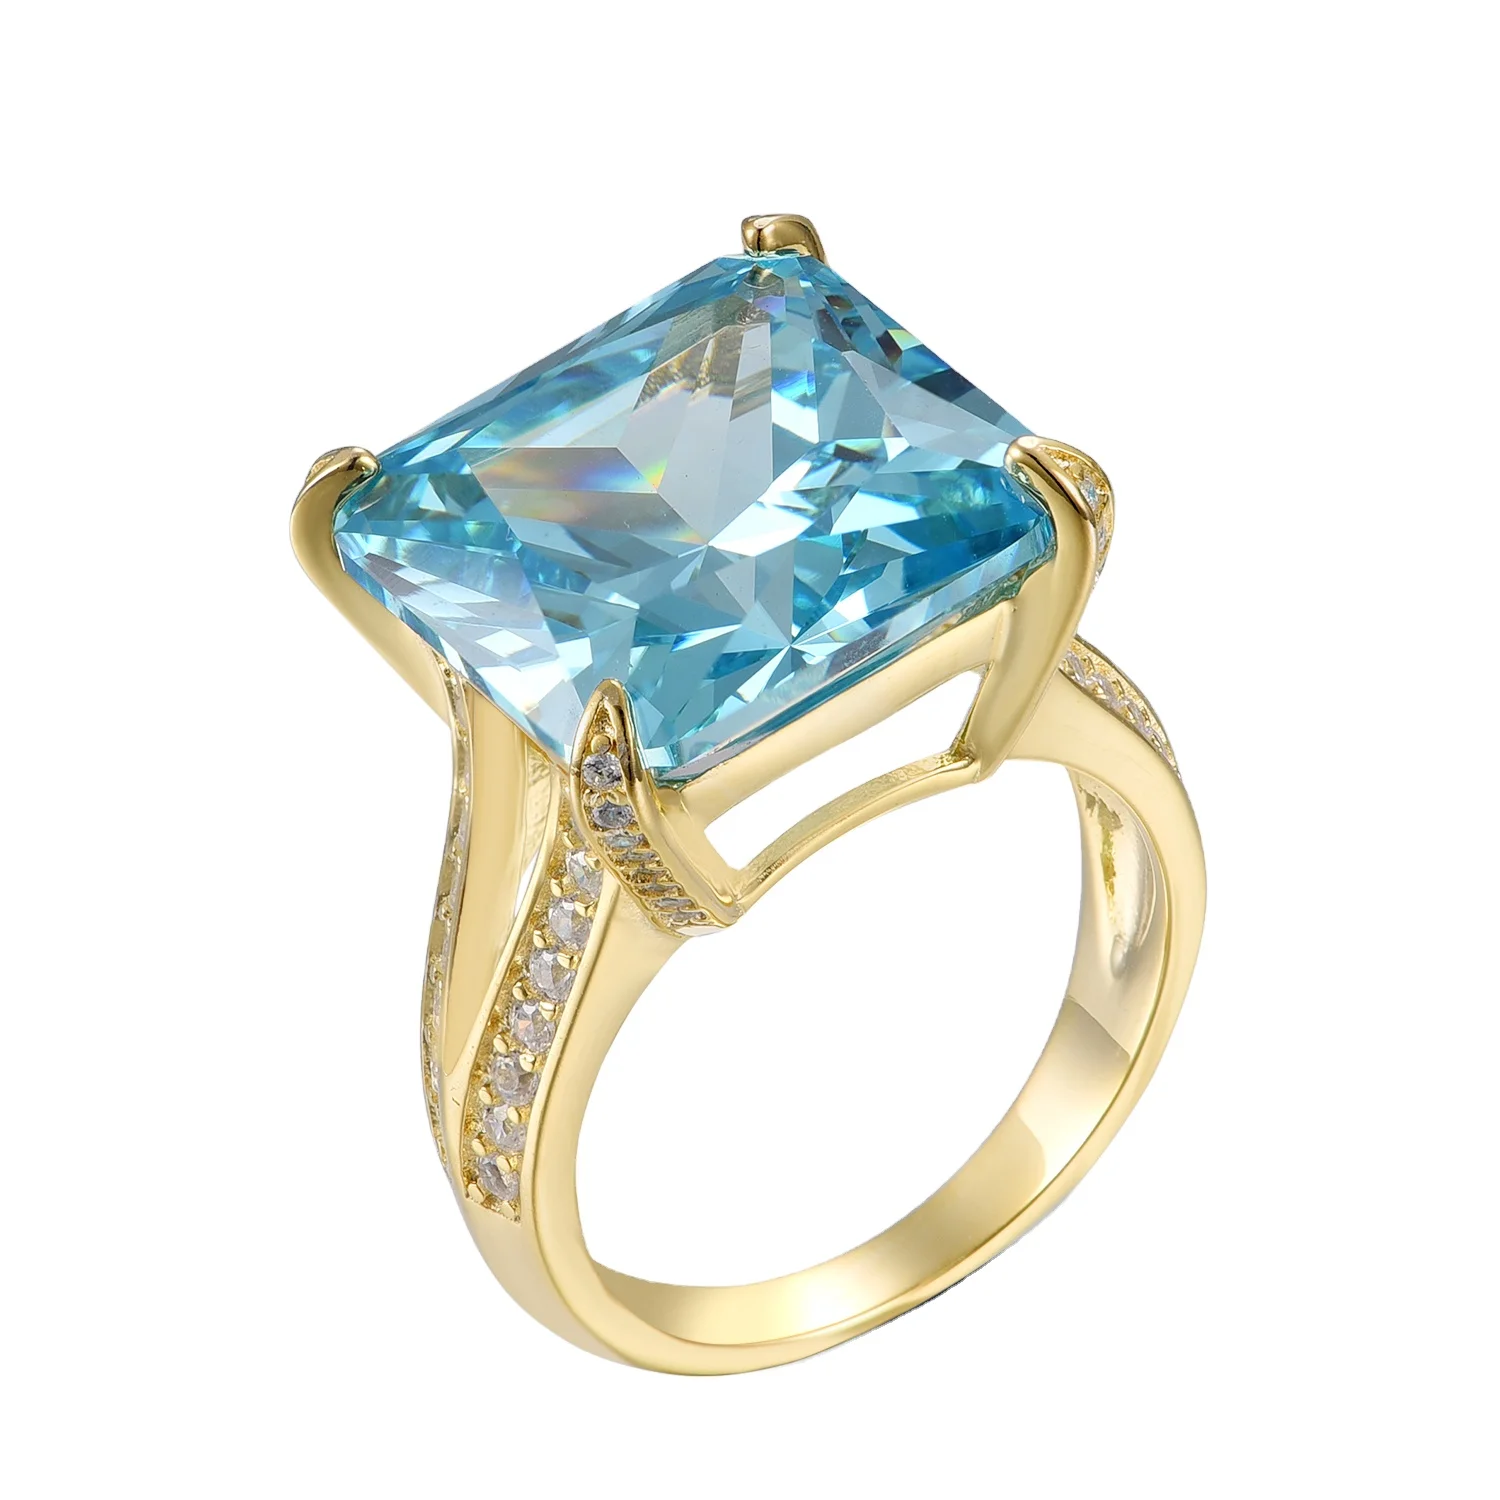 

High Quality Split Shank Big Stone Princess Cut Swiss Blue Topaz Jewelry Ring 18K Yellow Gold Plated Aquamarine Blue Rings